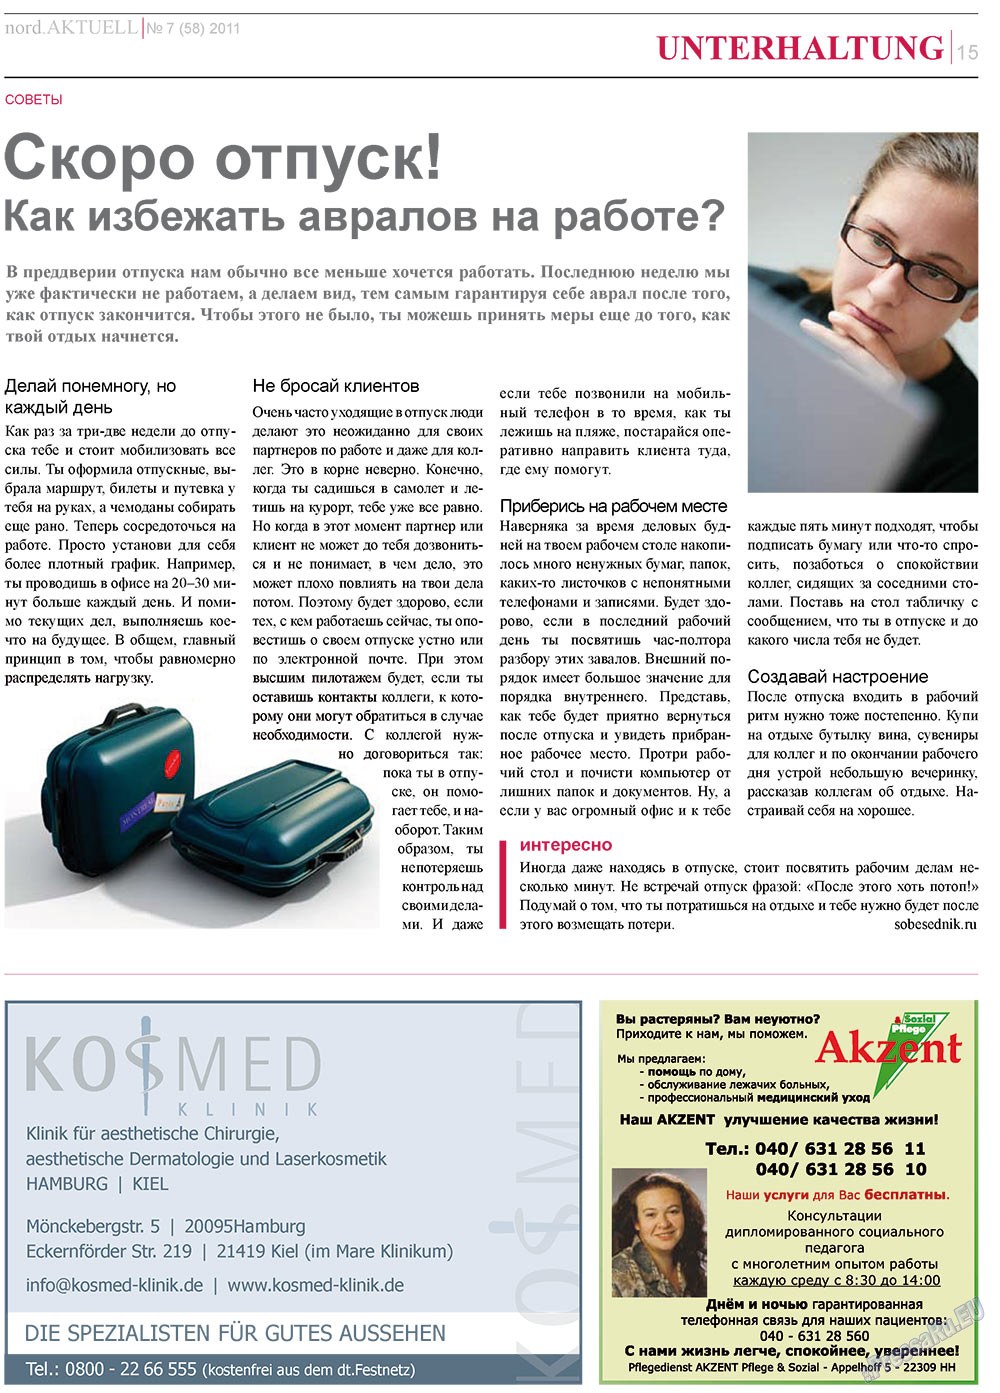 nord.Aktuell, газета. 2011 №7 стр.15